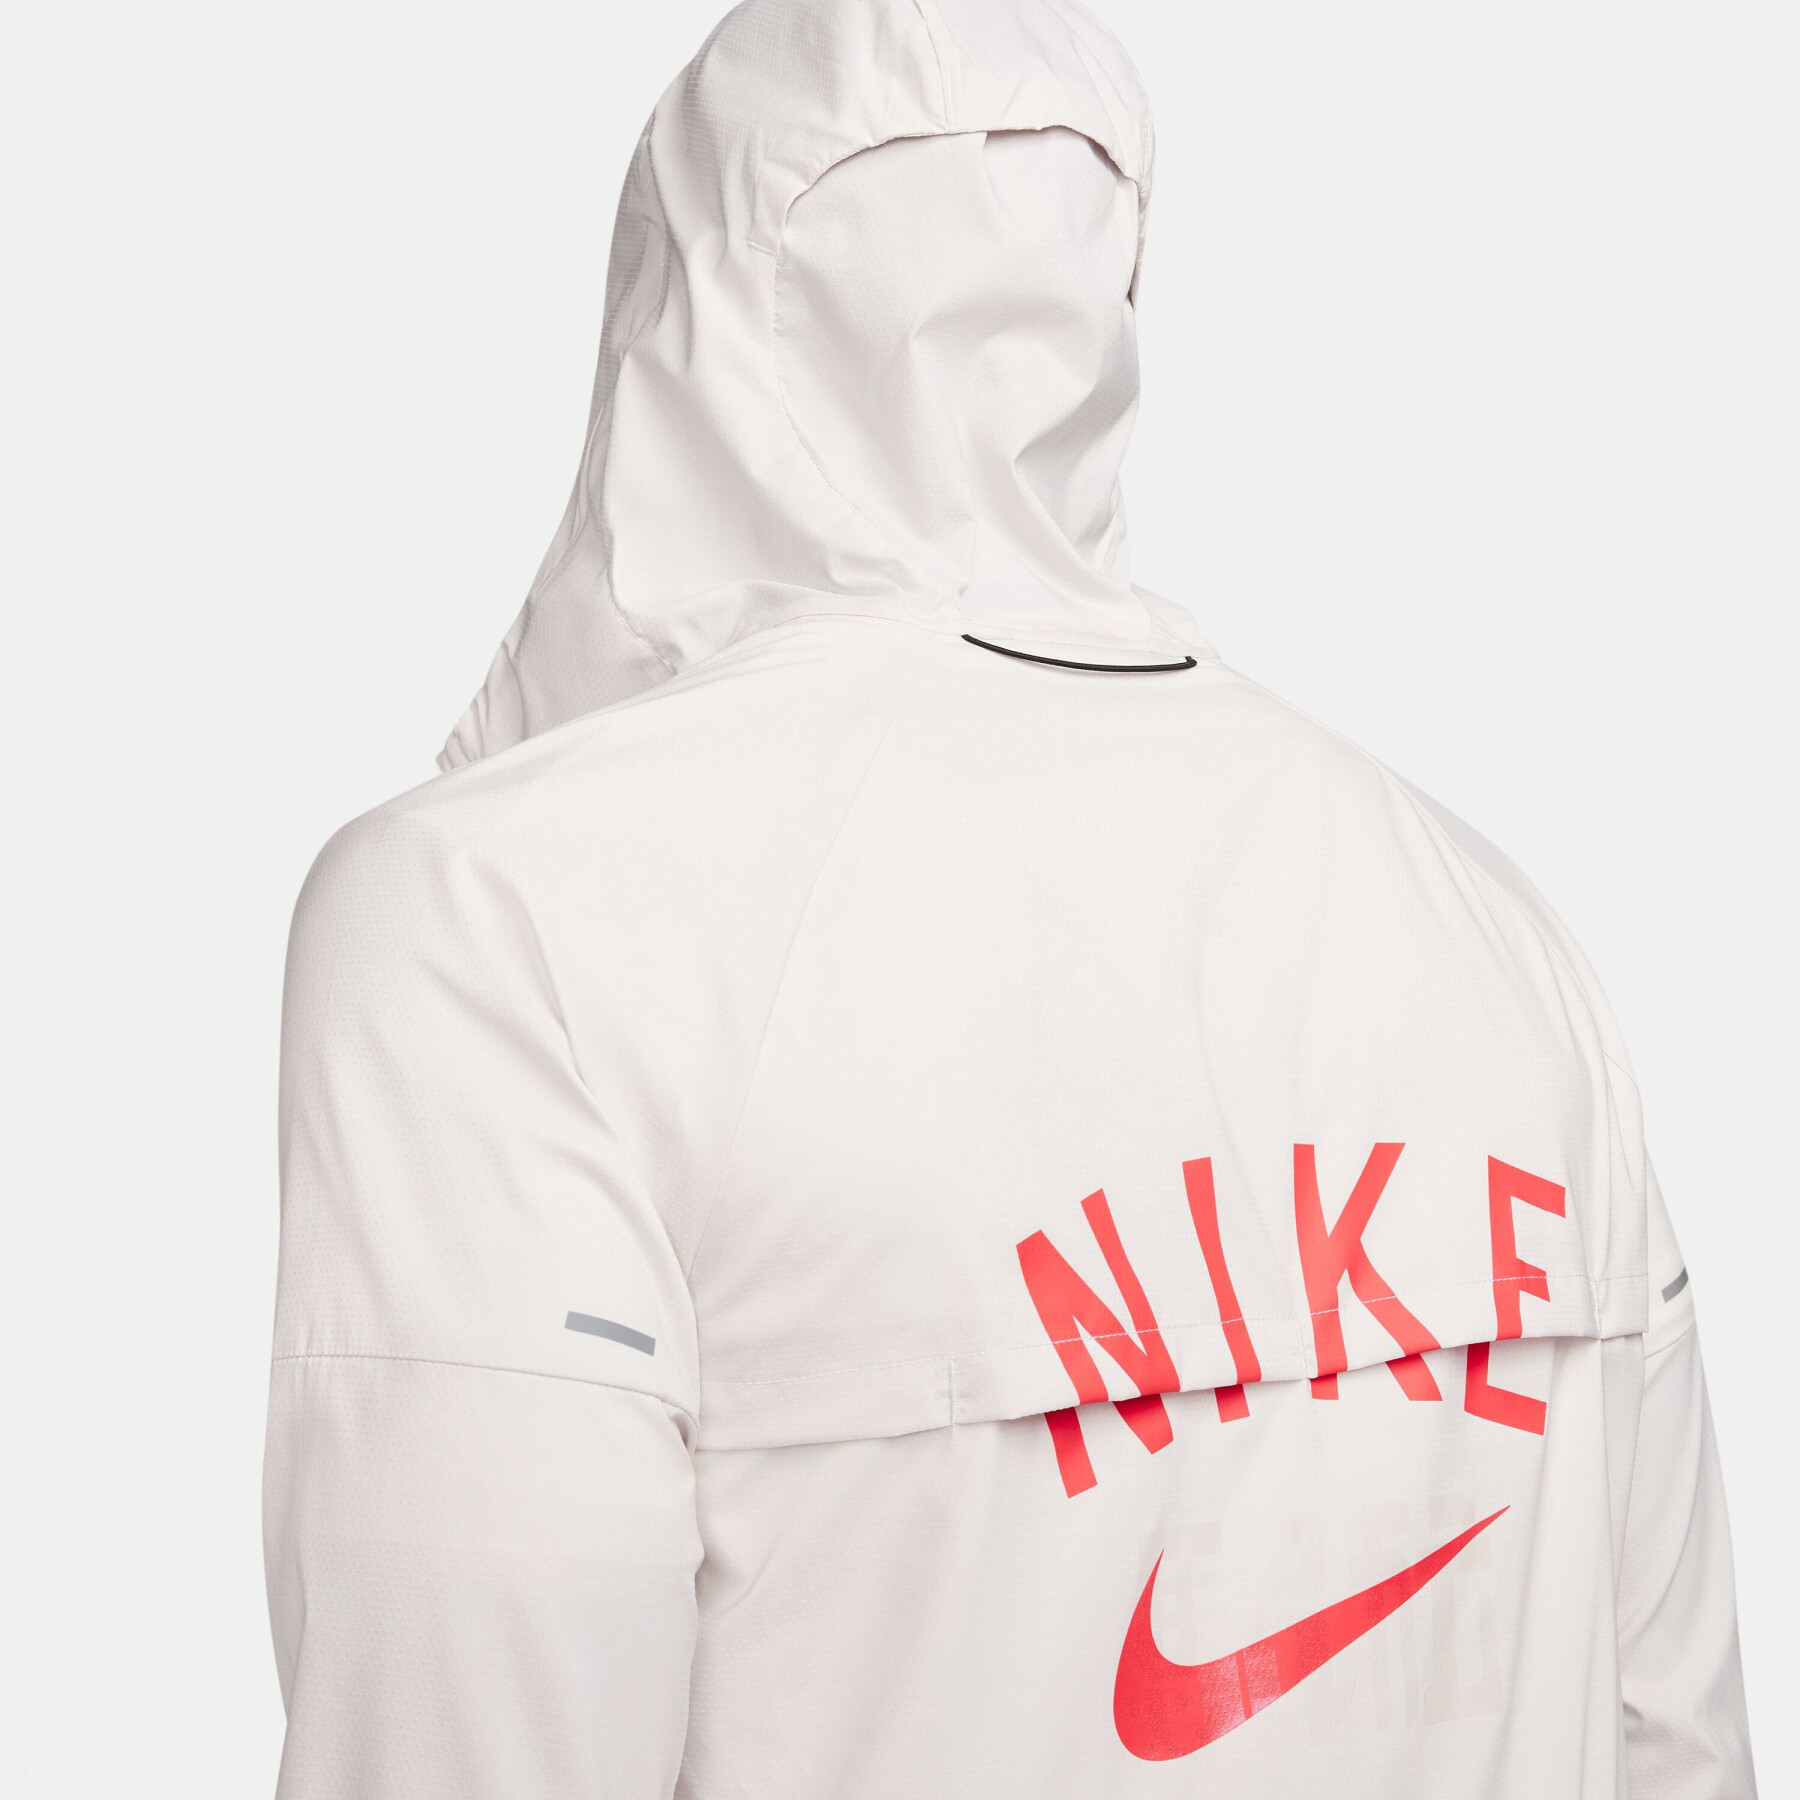 Sweat jacket Nike UV Windrunner HKNE - Clothing Running - Running -  Physical maintenance